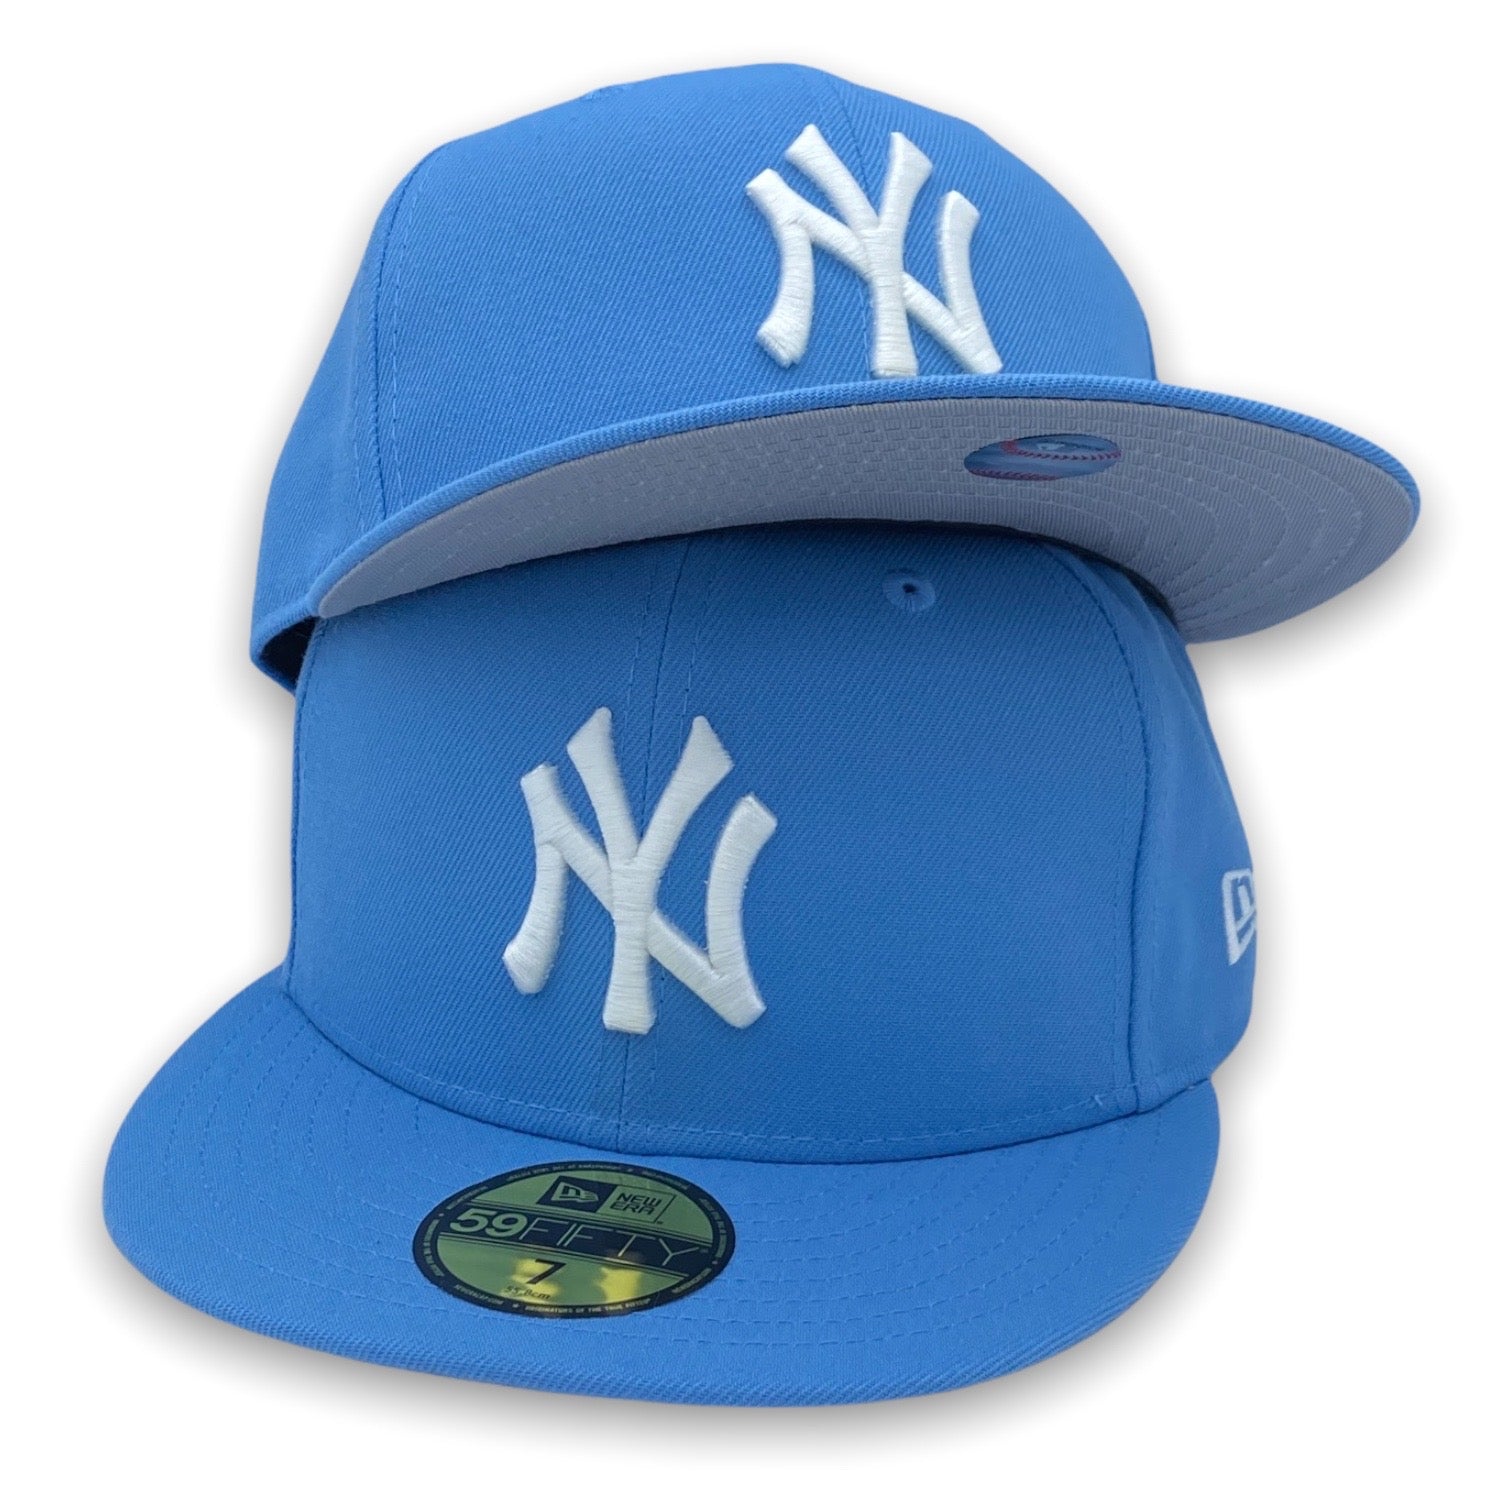 New York Yankees Cap real vs fake review. How to spot fake new era MLB hat  